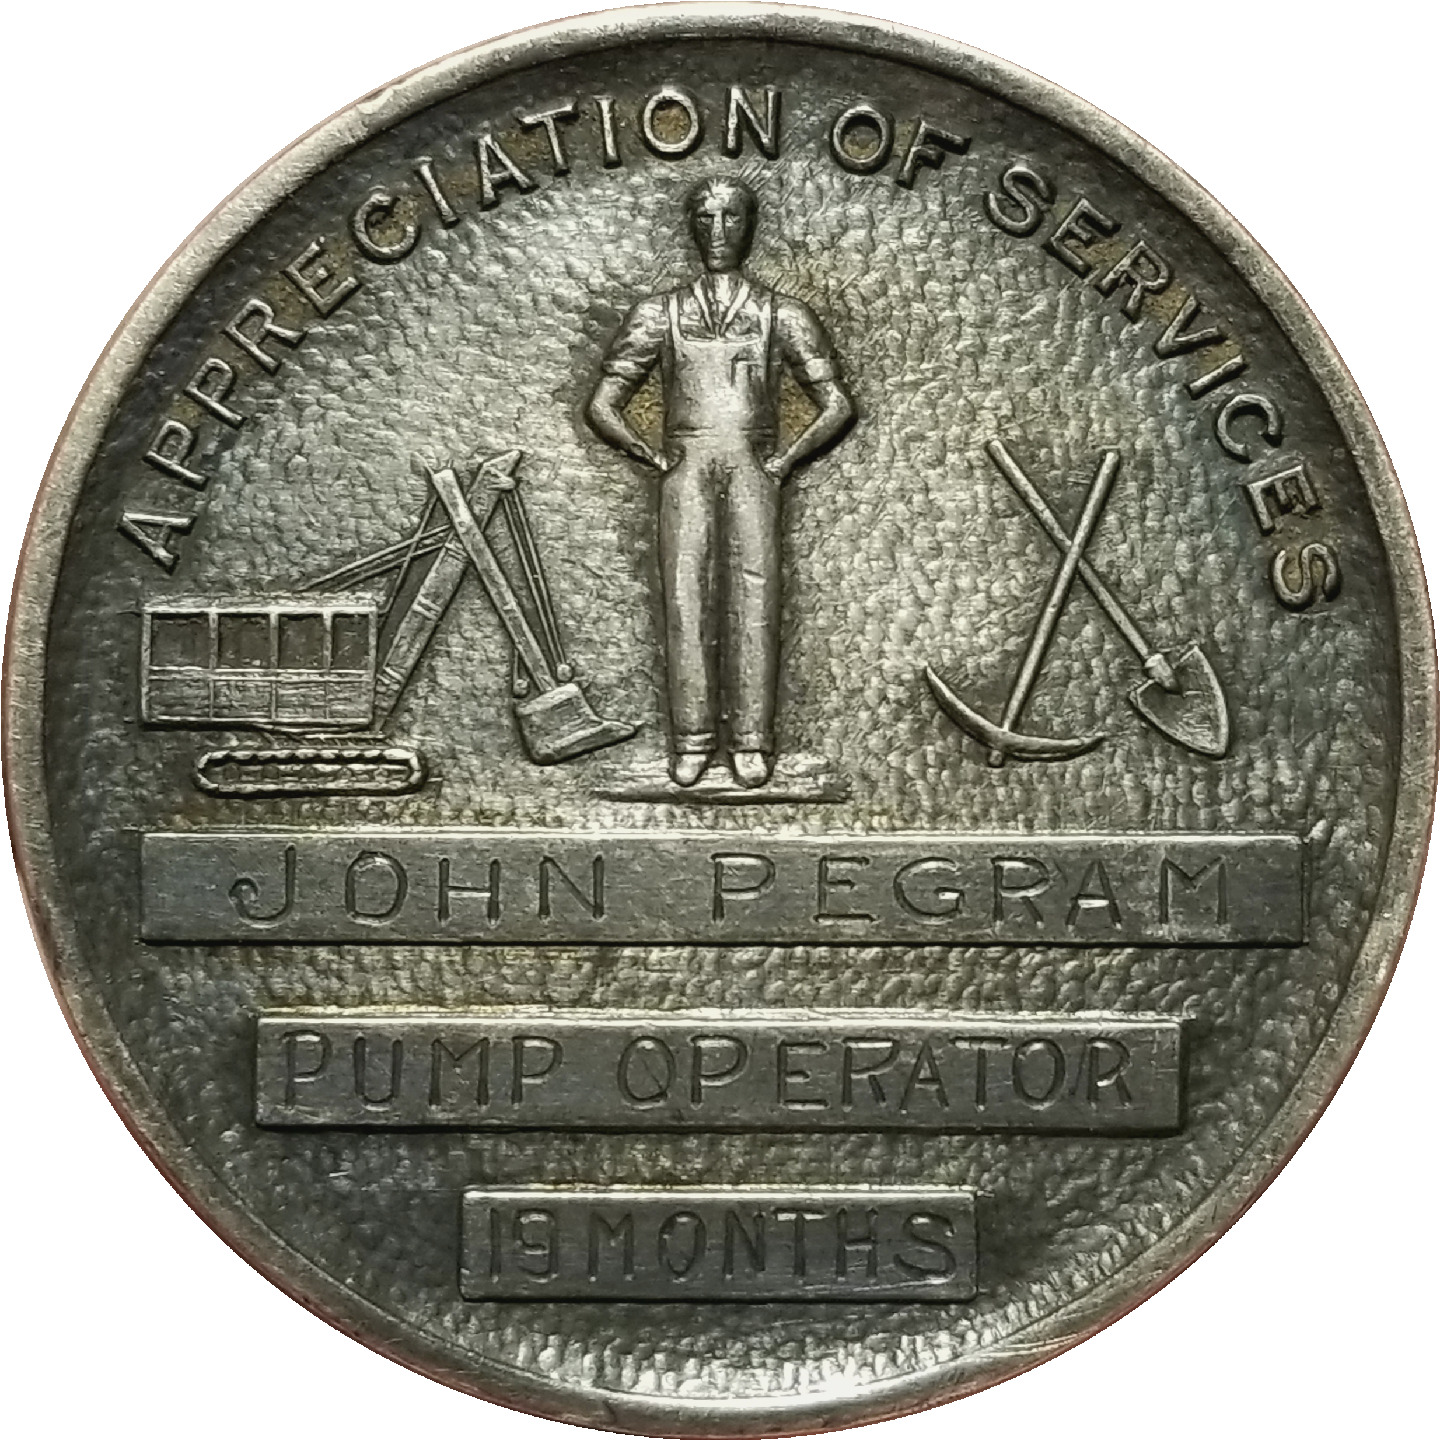 Vtg PARDEE DAM & SPILLWAY 1927 1929 ATKINSON CONSTRUCTION CO. Silver Award Medal